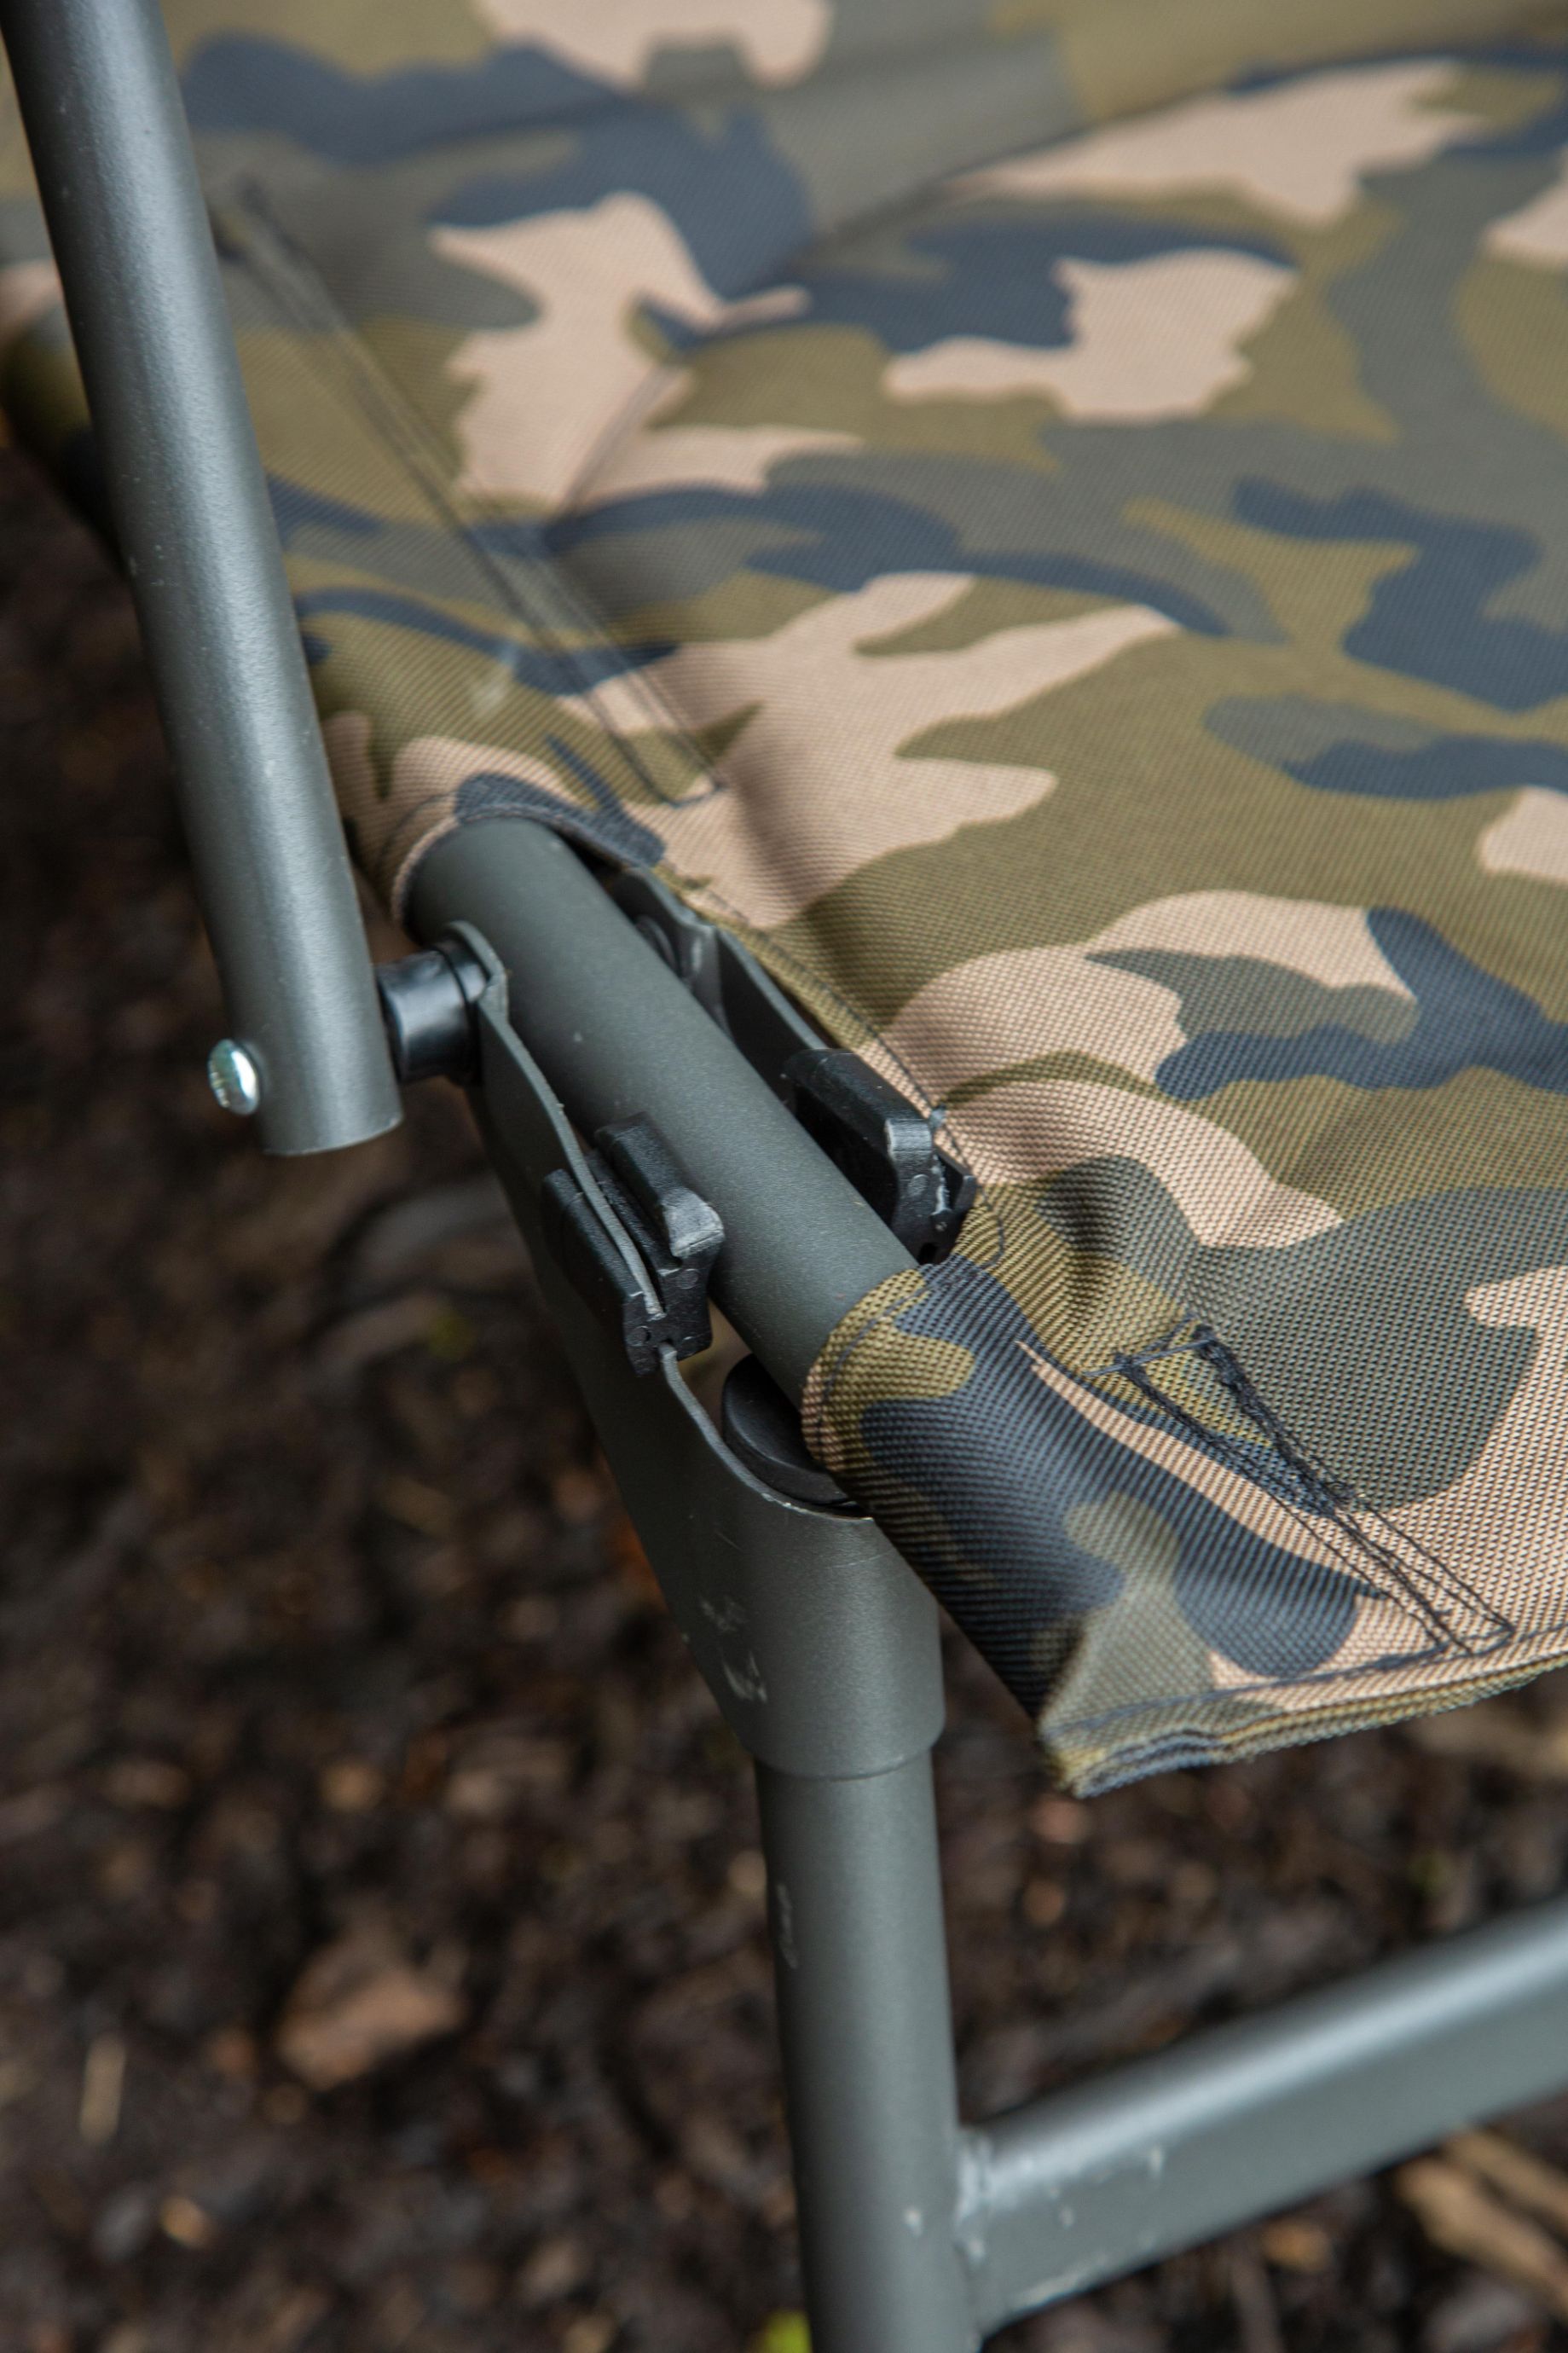 Fotel Karpiowy Ultimate Recliner Comfort Chair Camo